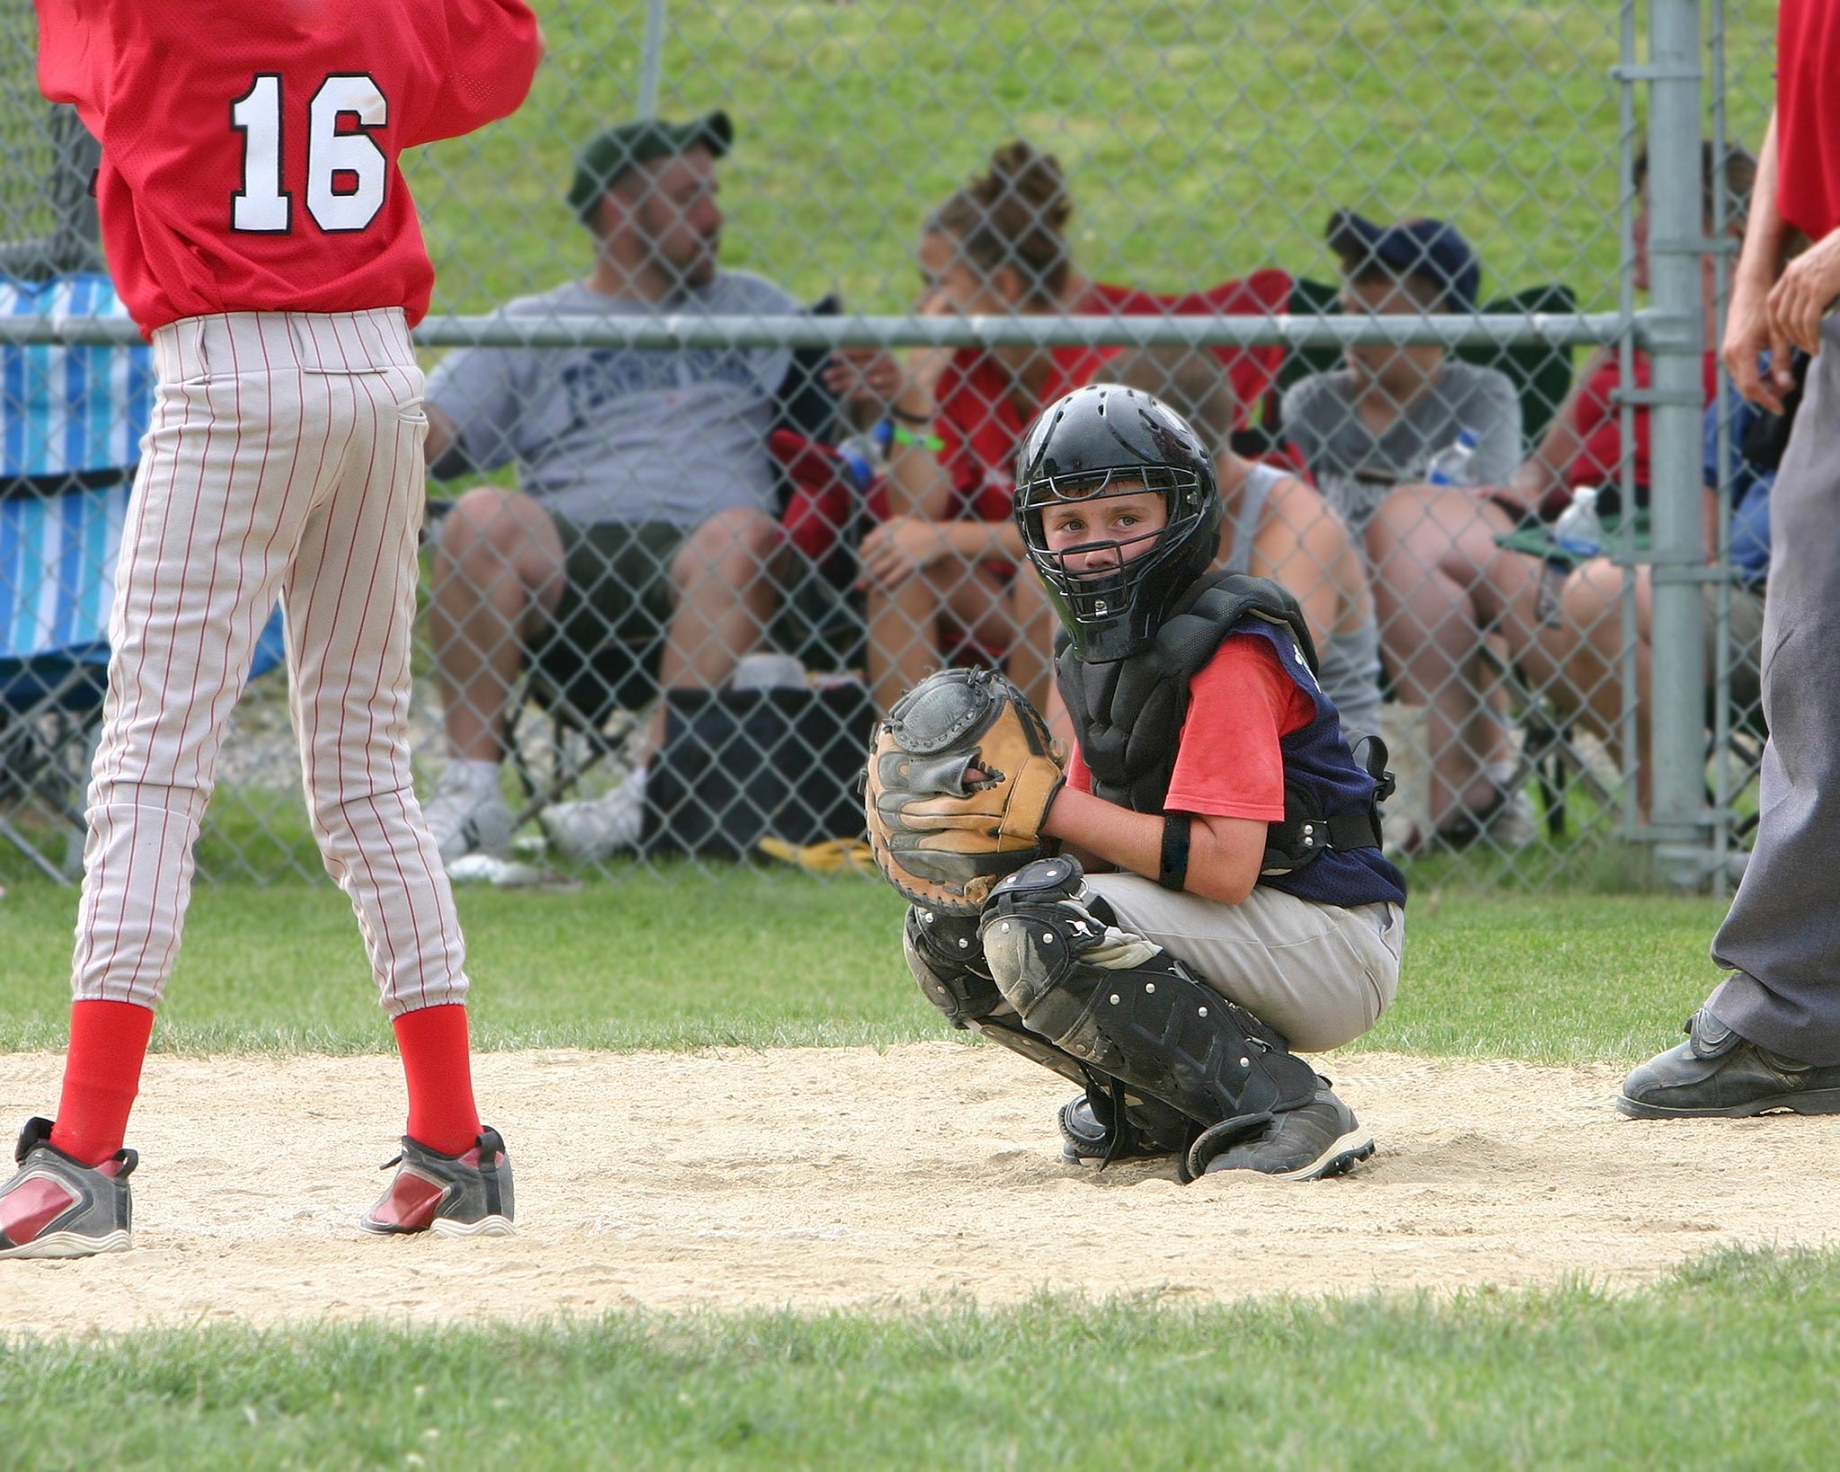 Young baseball catcher